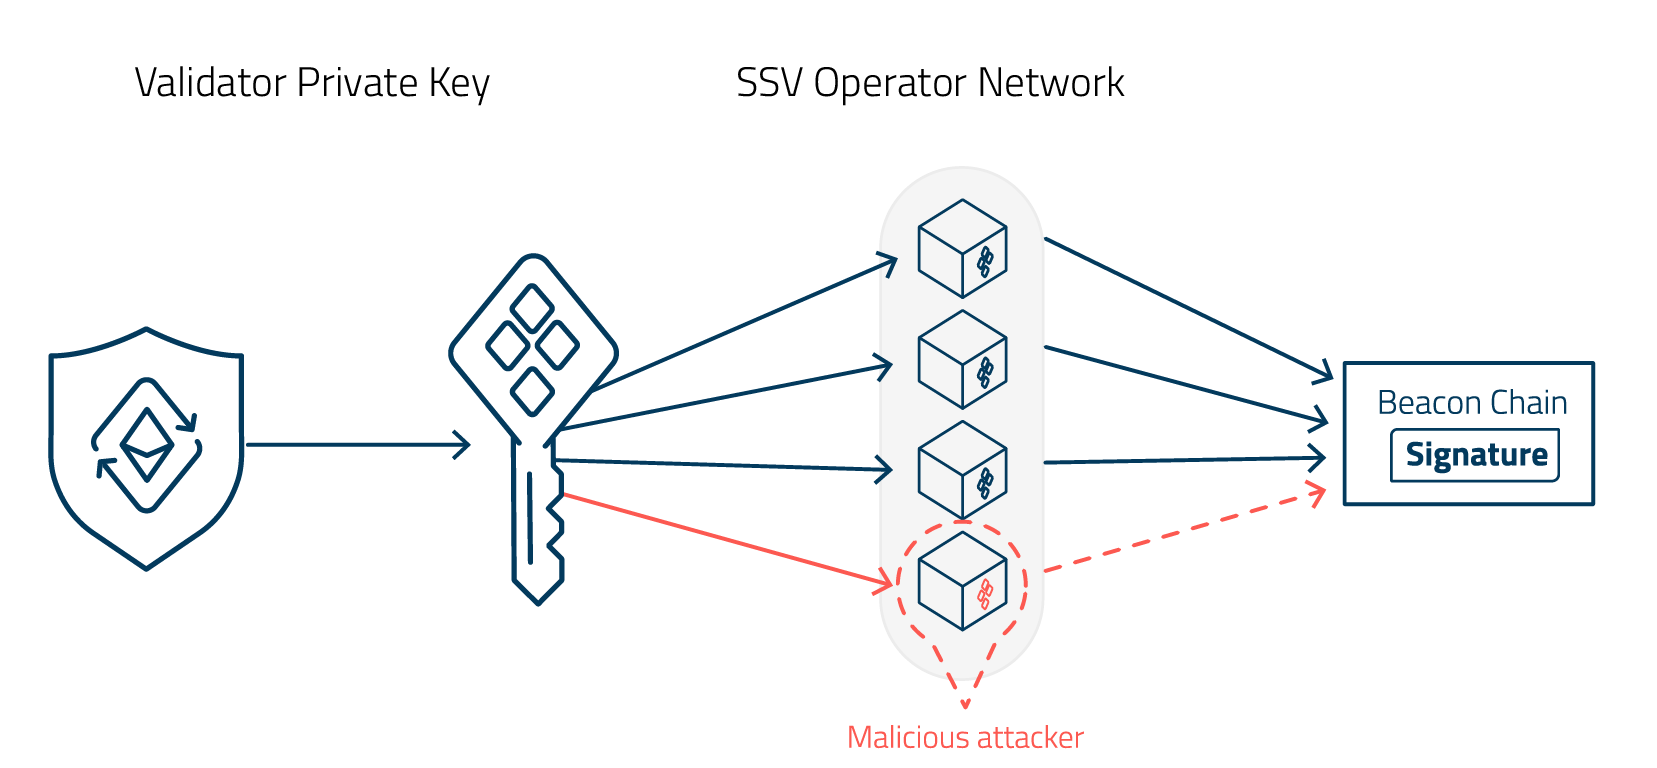 How Validator Key while malicious attack